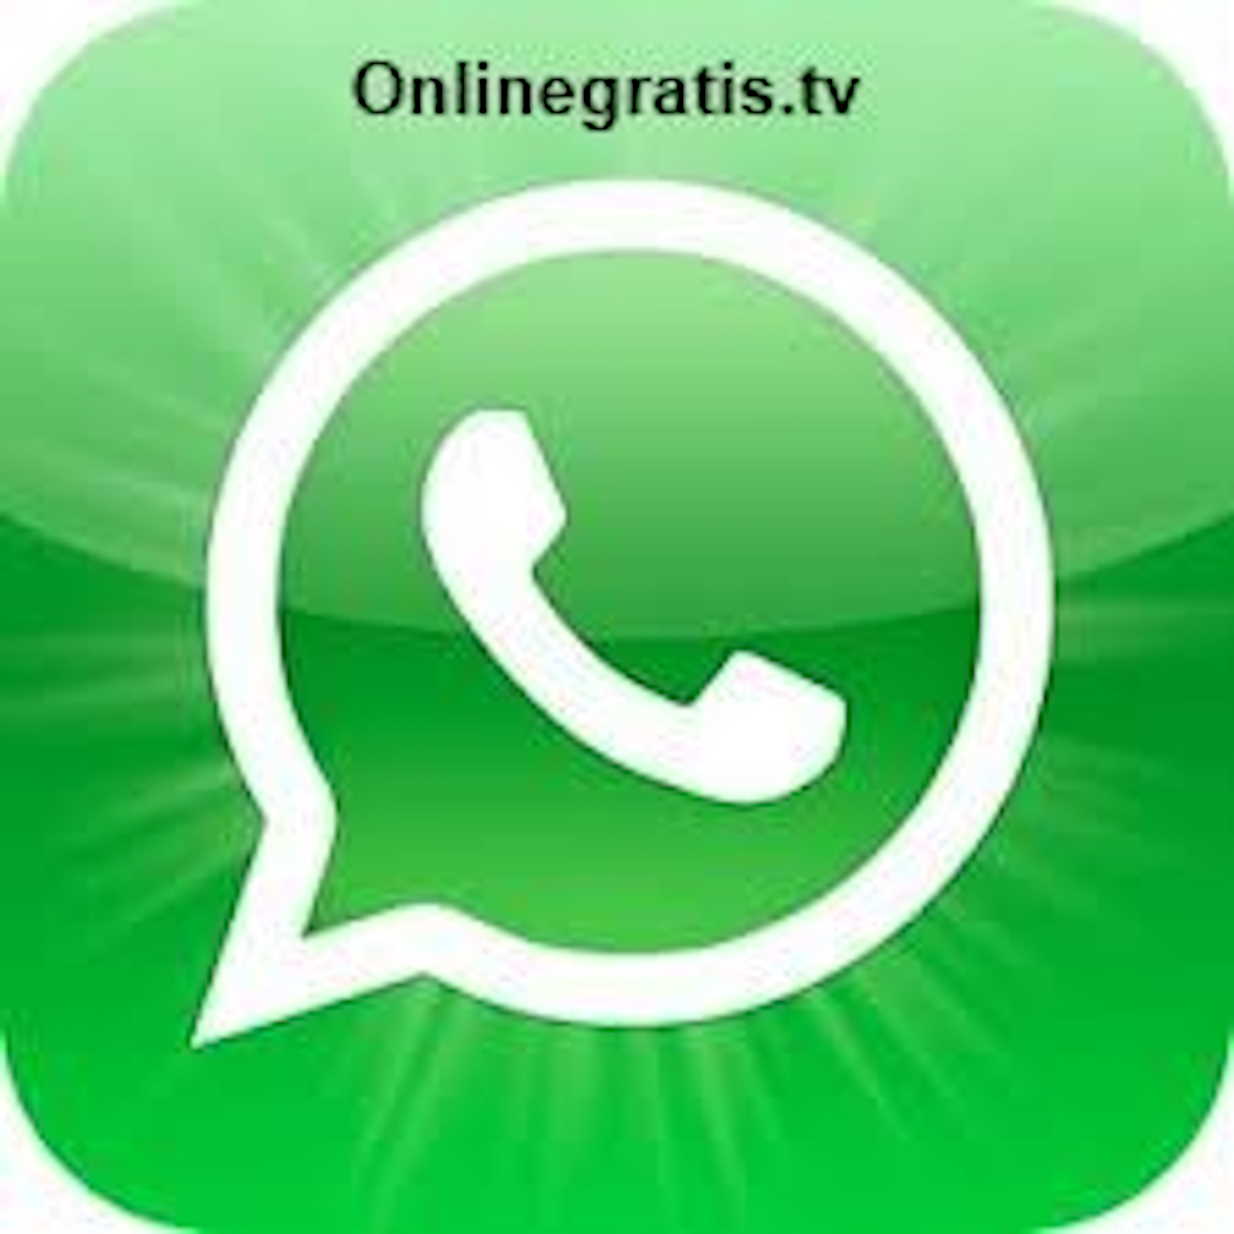 WhatsApp online gratis